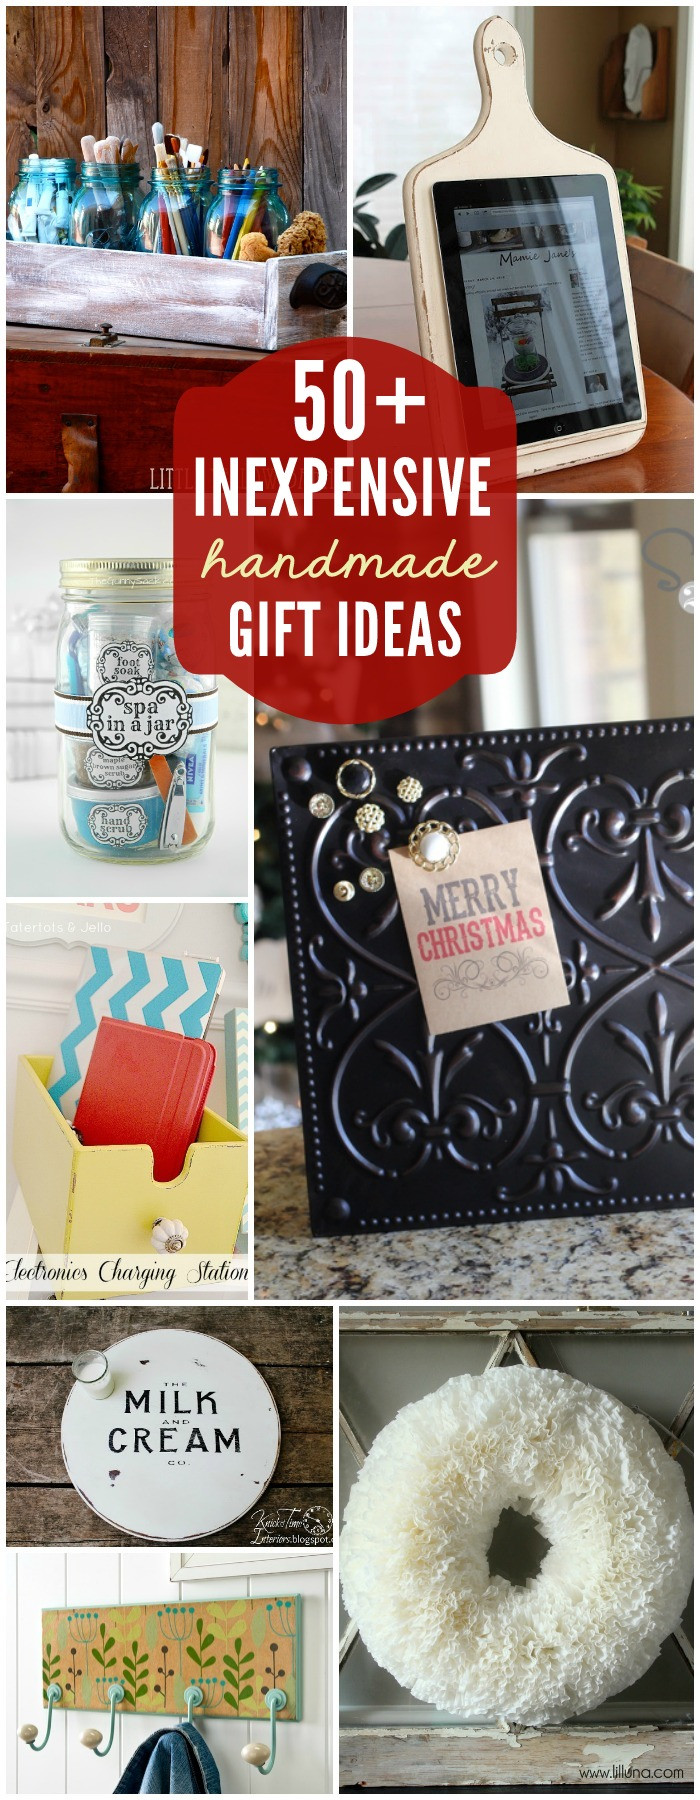 Homemade Gift Ideas For Christmas
 Inexpensive Birthday Gift Ideas